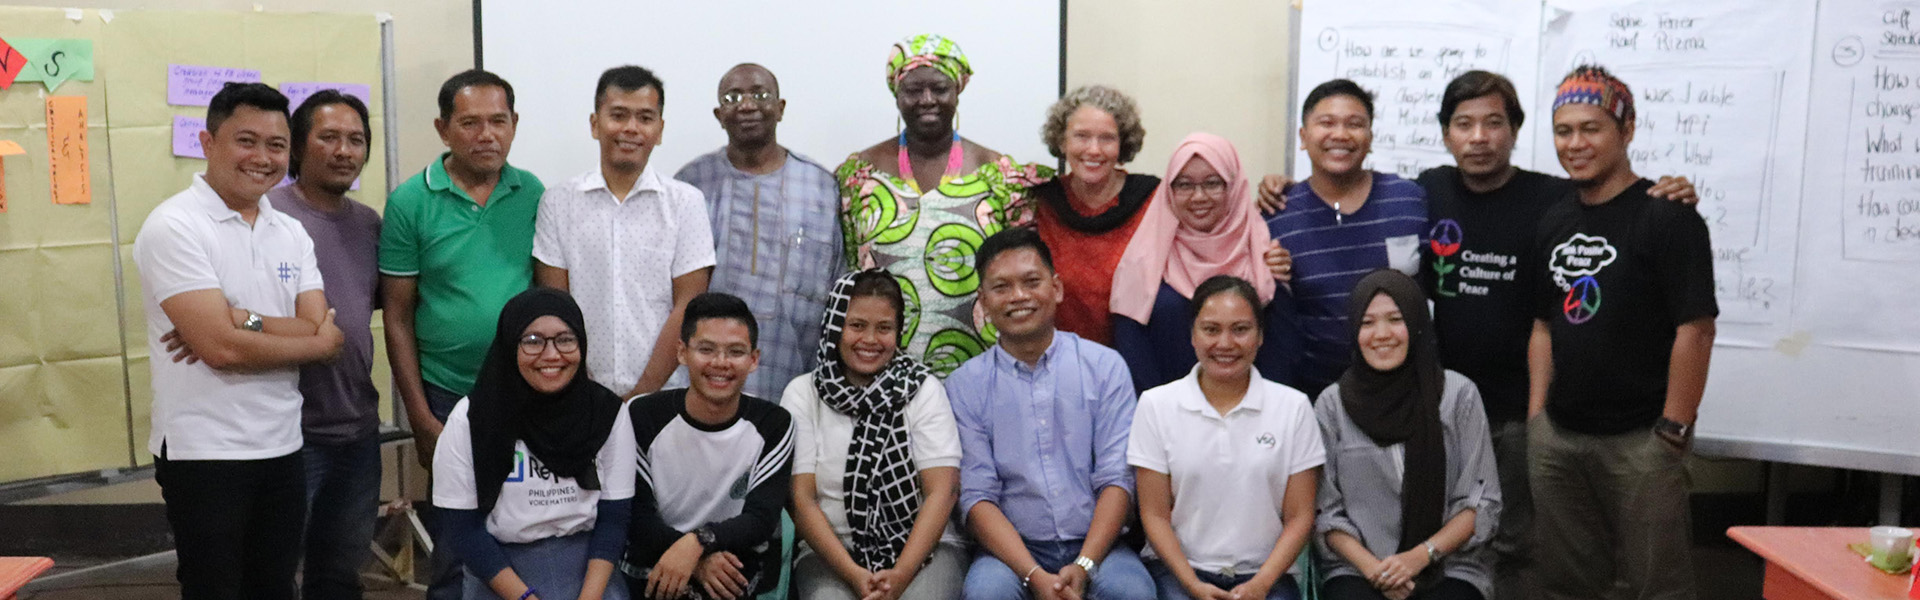 MPI Alumni Gathering in Cotabato: MPI, a game changer